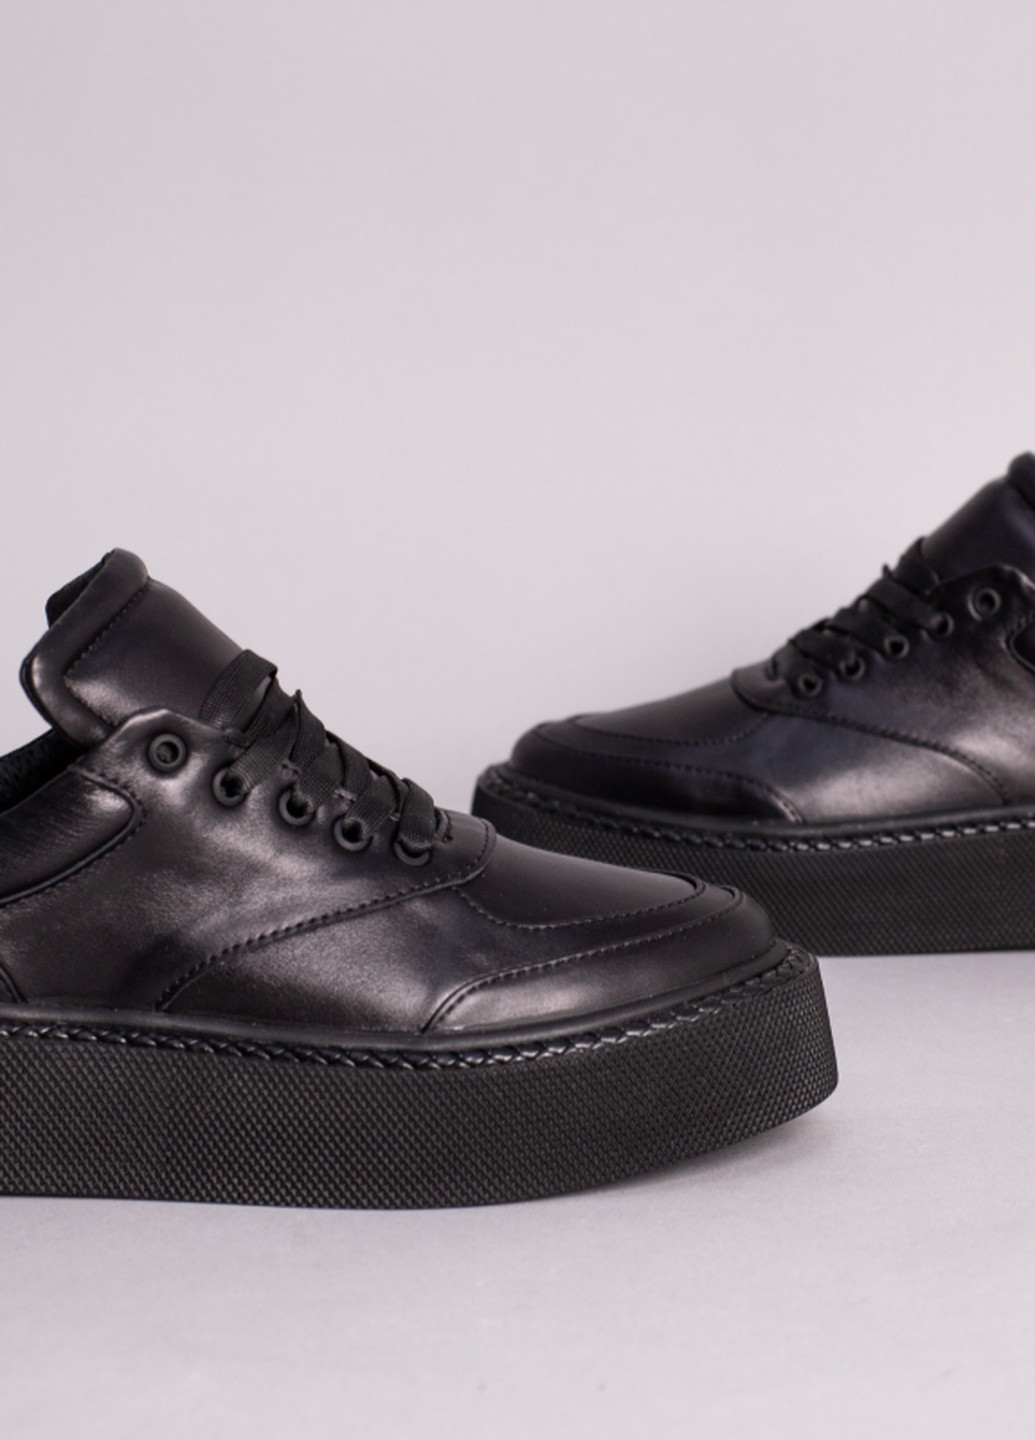 Черные кеды shoesband Brand